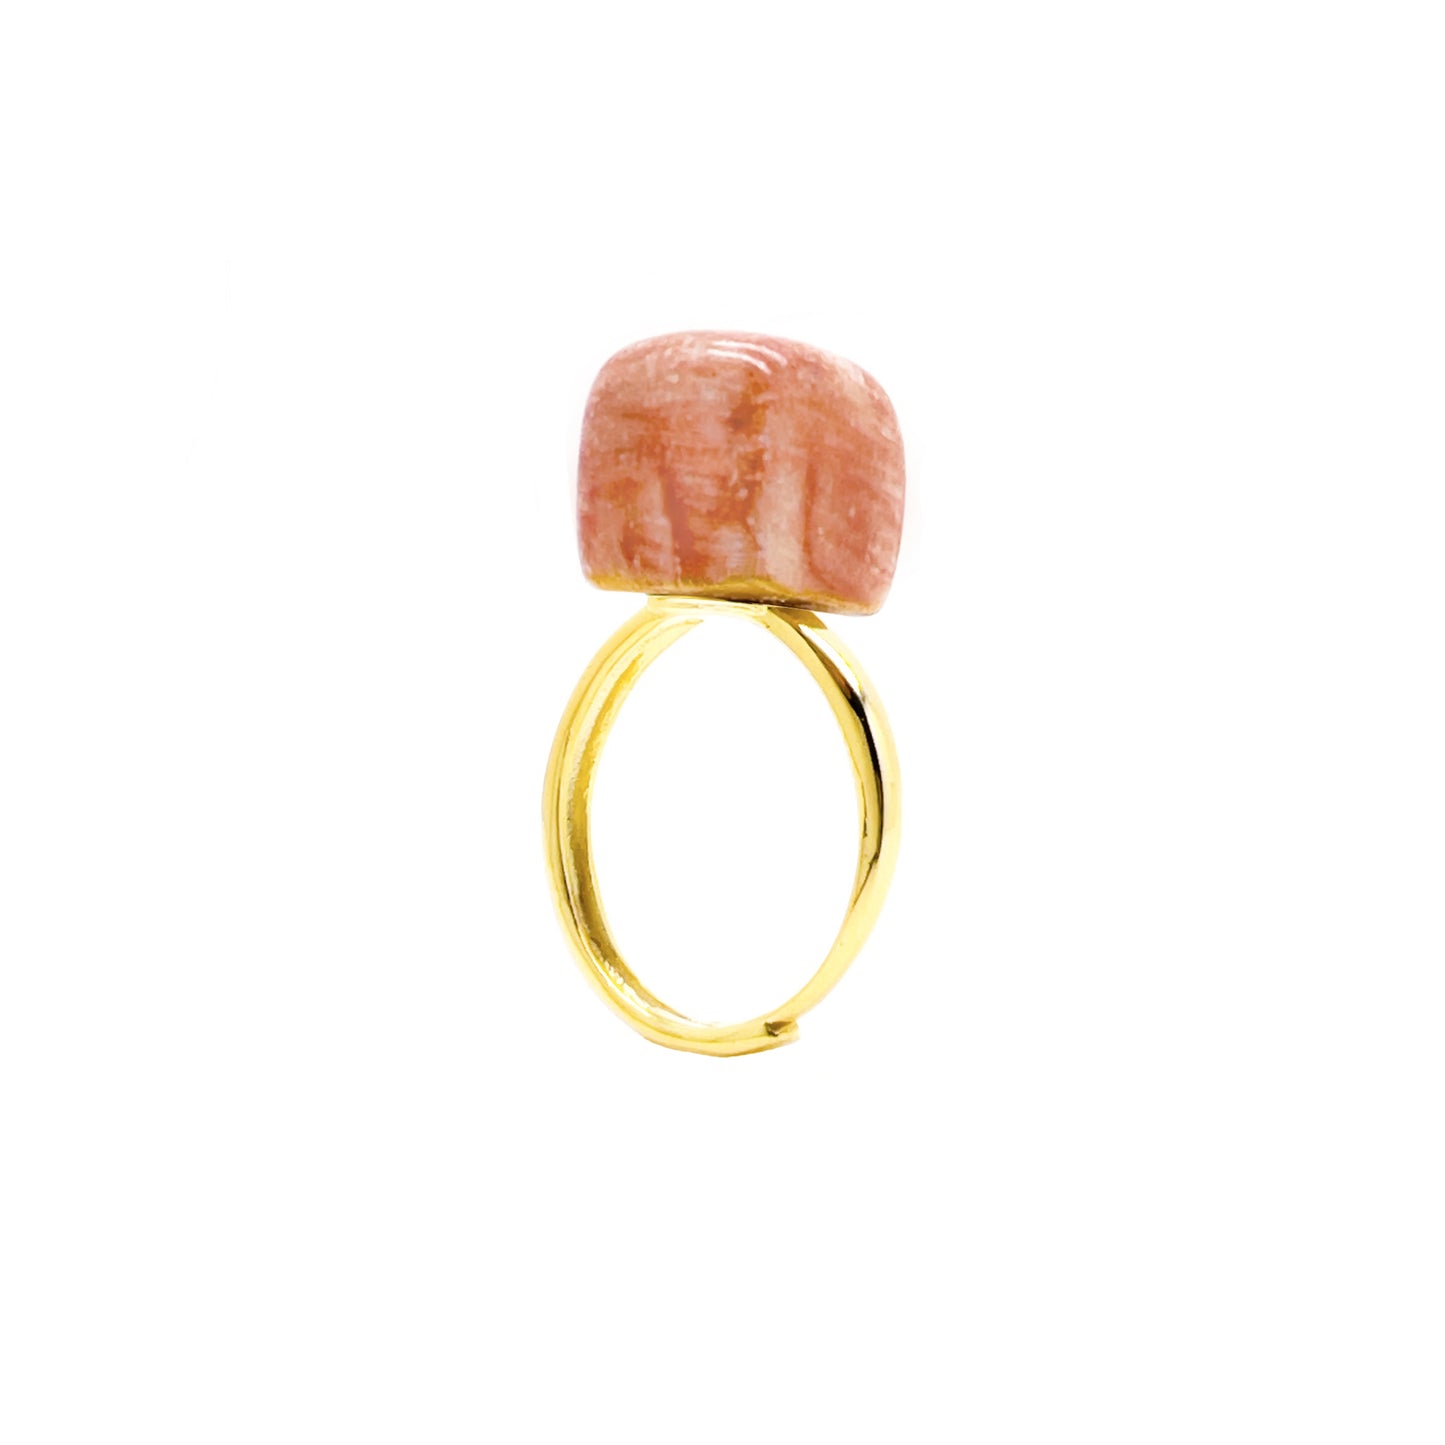 Maxi Cubo ring in salmon pink ceramic